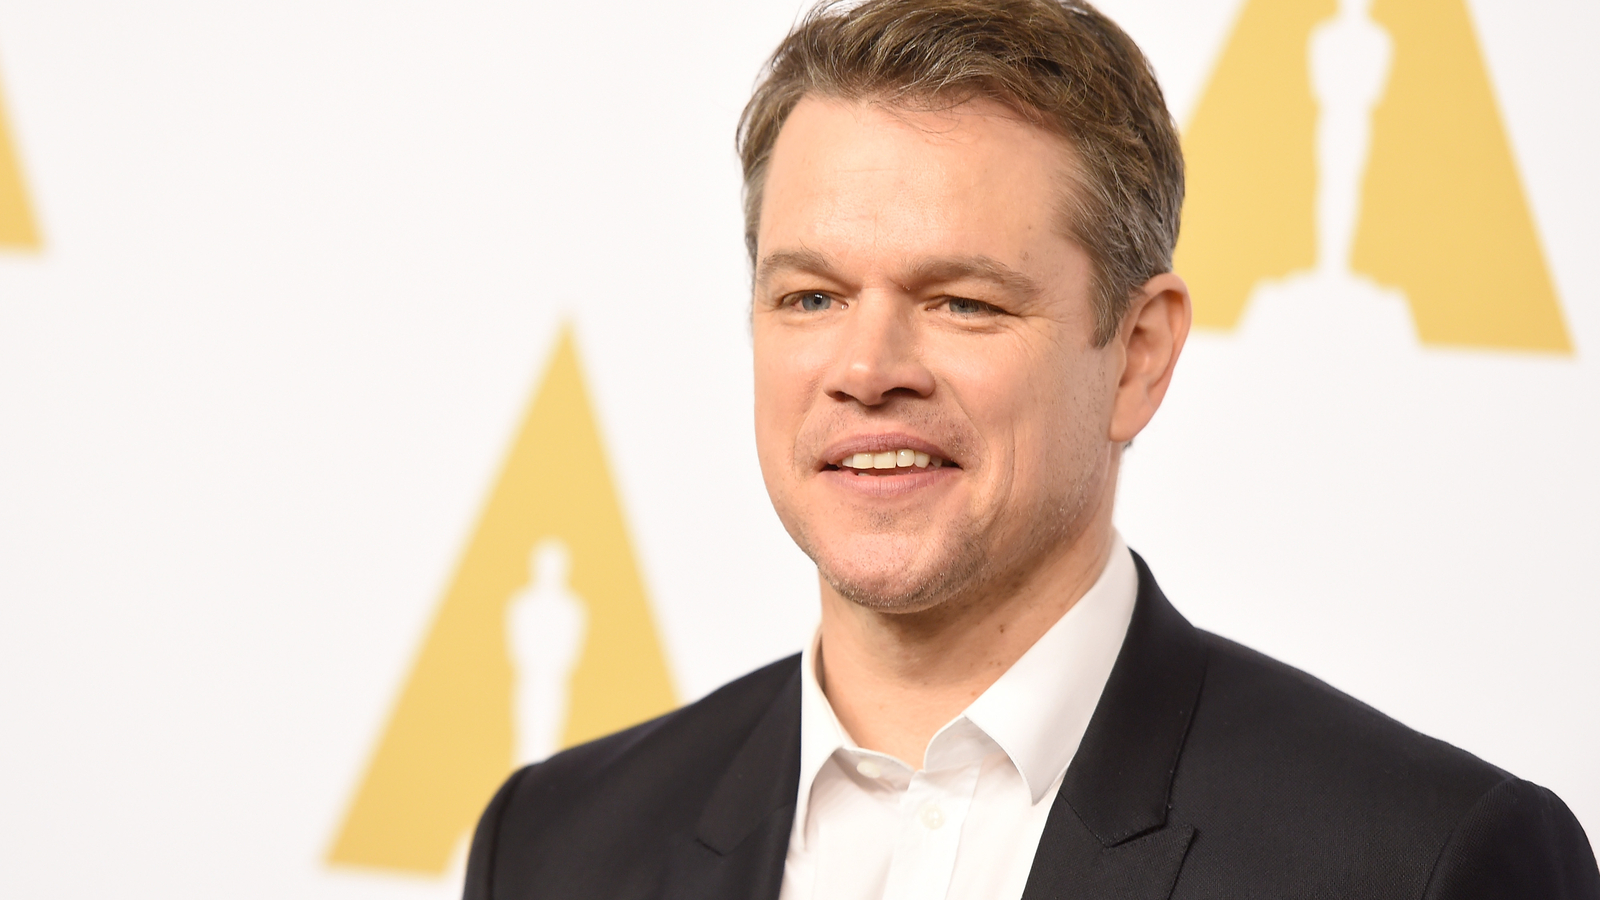 OscarPreisträger Matt Damon feiert 50. Geburtstag!